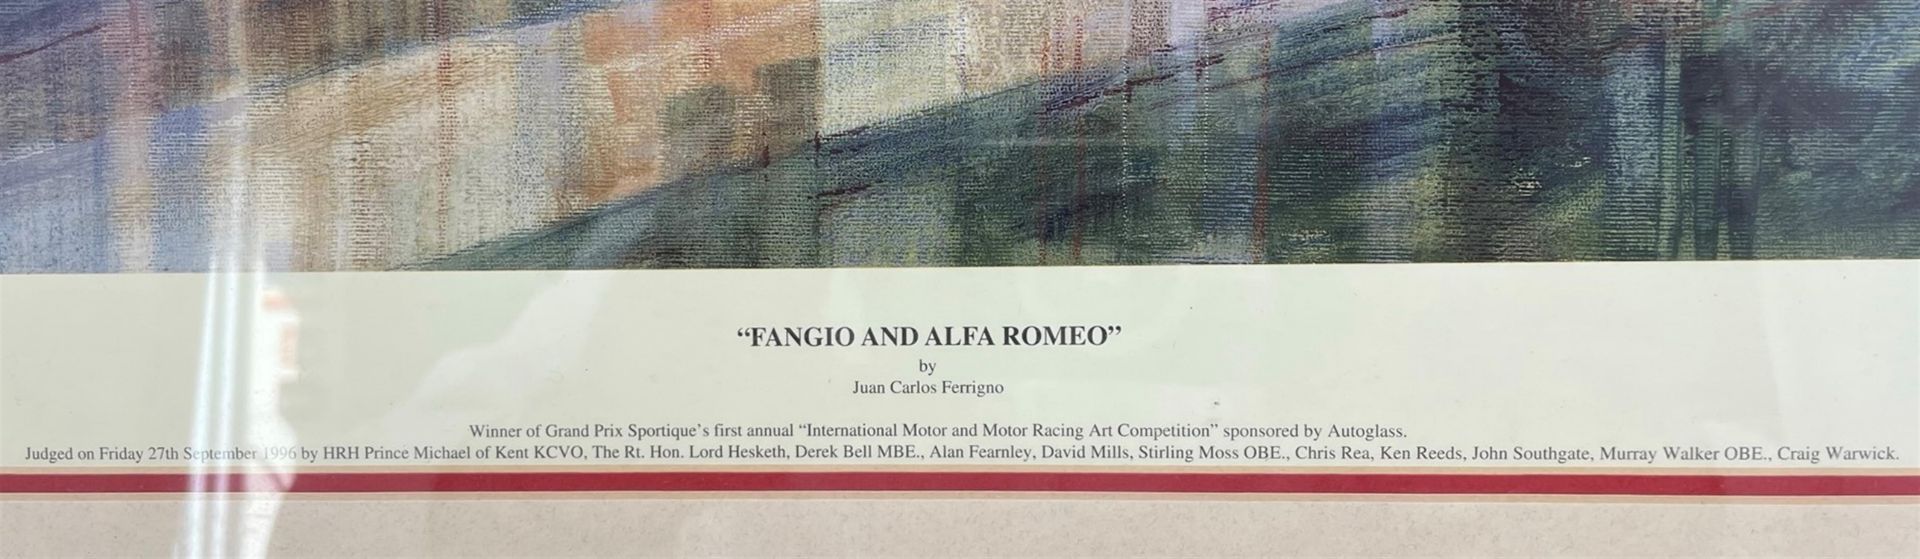 Fangio at the Wheel of the Alfa Romeo Alfetta 159 - Image 5 of 6